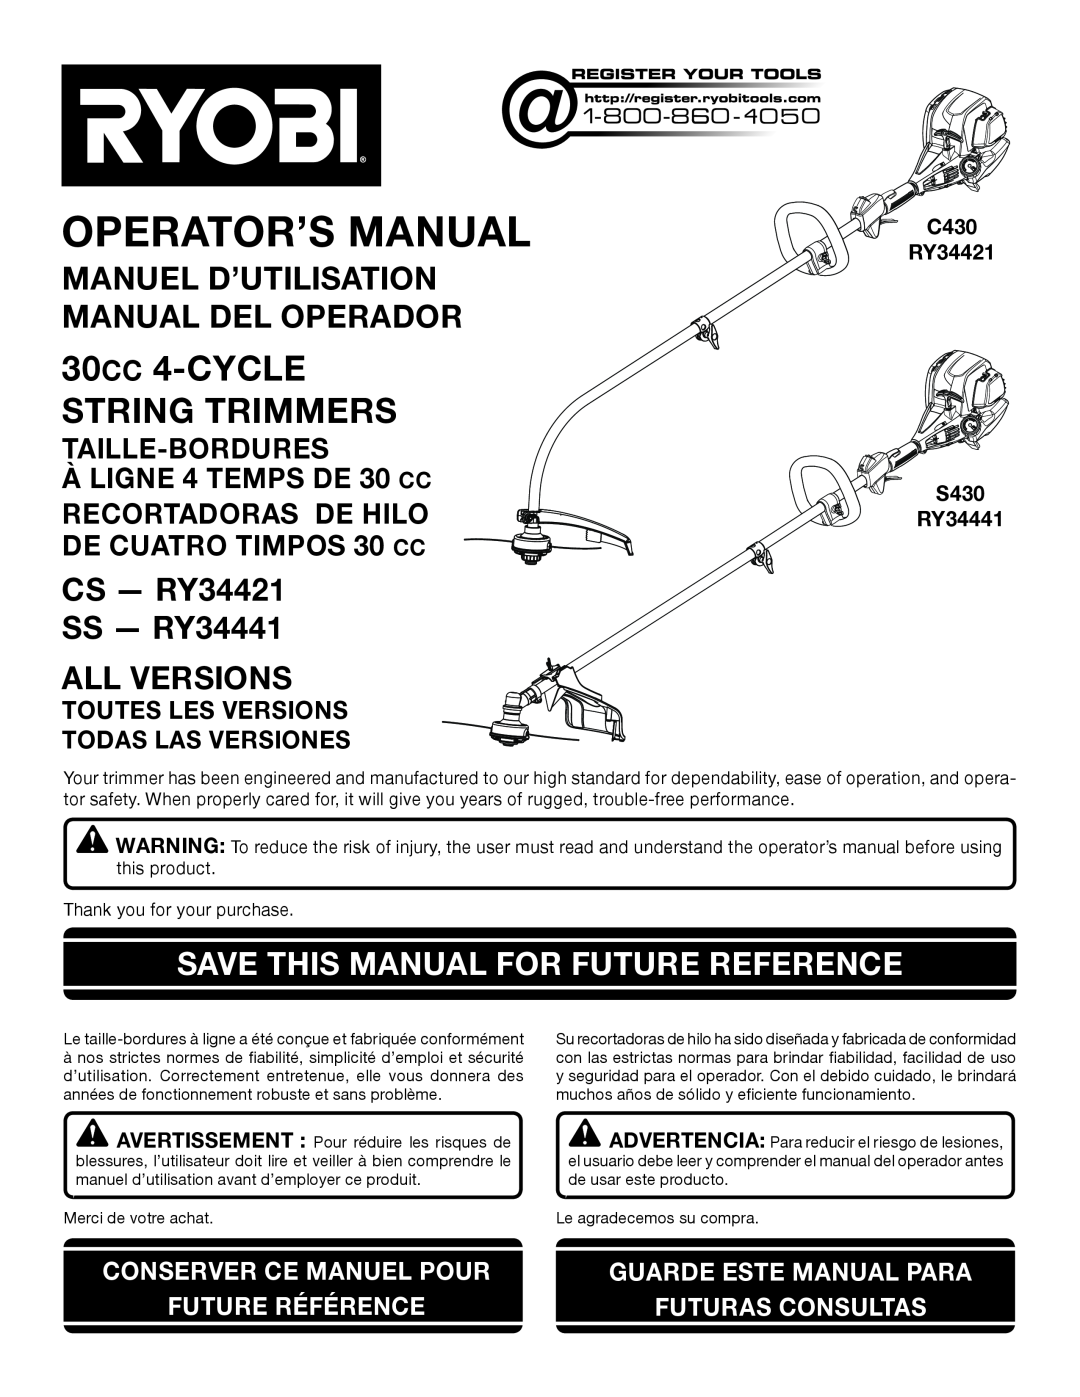 Ryobi S430 RY34441 manuel dutilisation 30CC 4-CYCLE, String Trimmers, Manuel D’Utilisation Manual Del Operador 